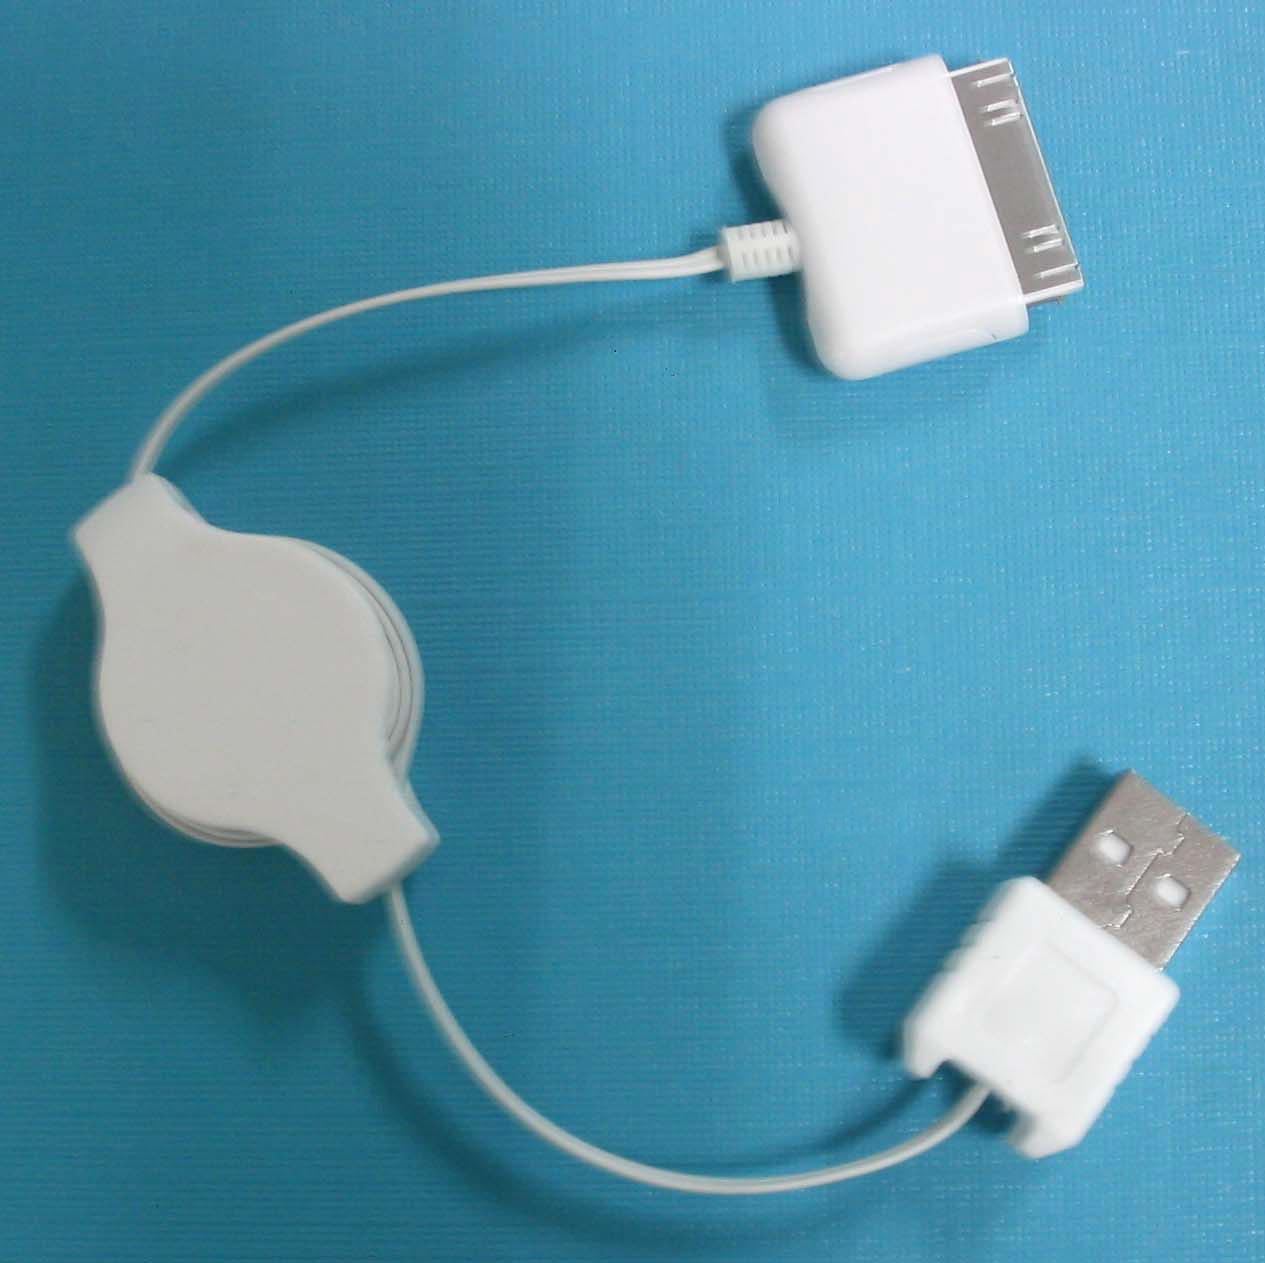  USB Cable (USB-Kabel)